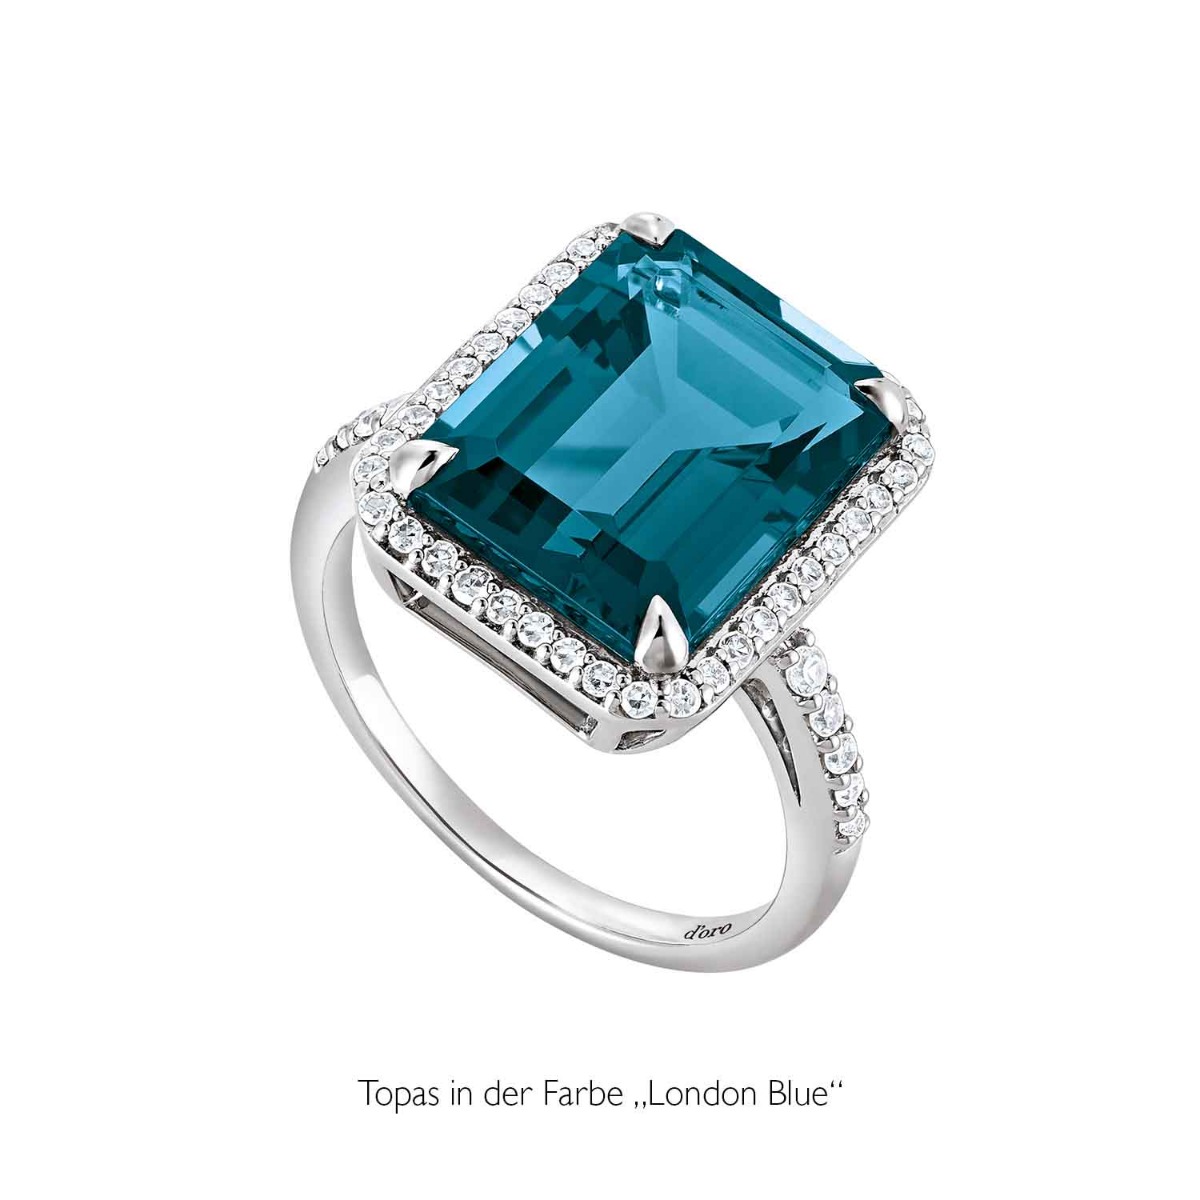 Ring mit Topas in der Farbe "London Blue"